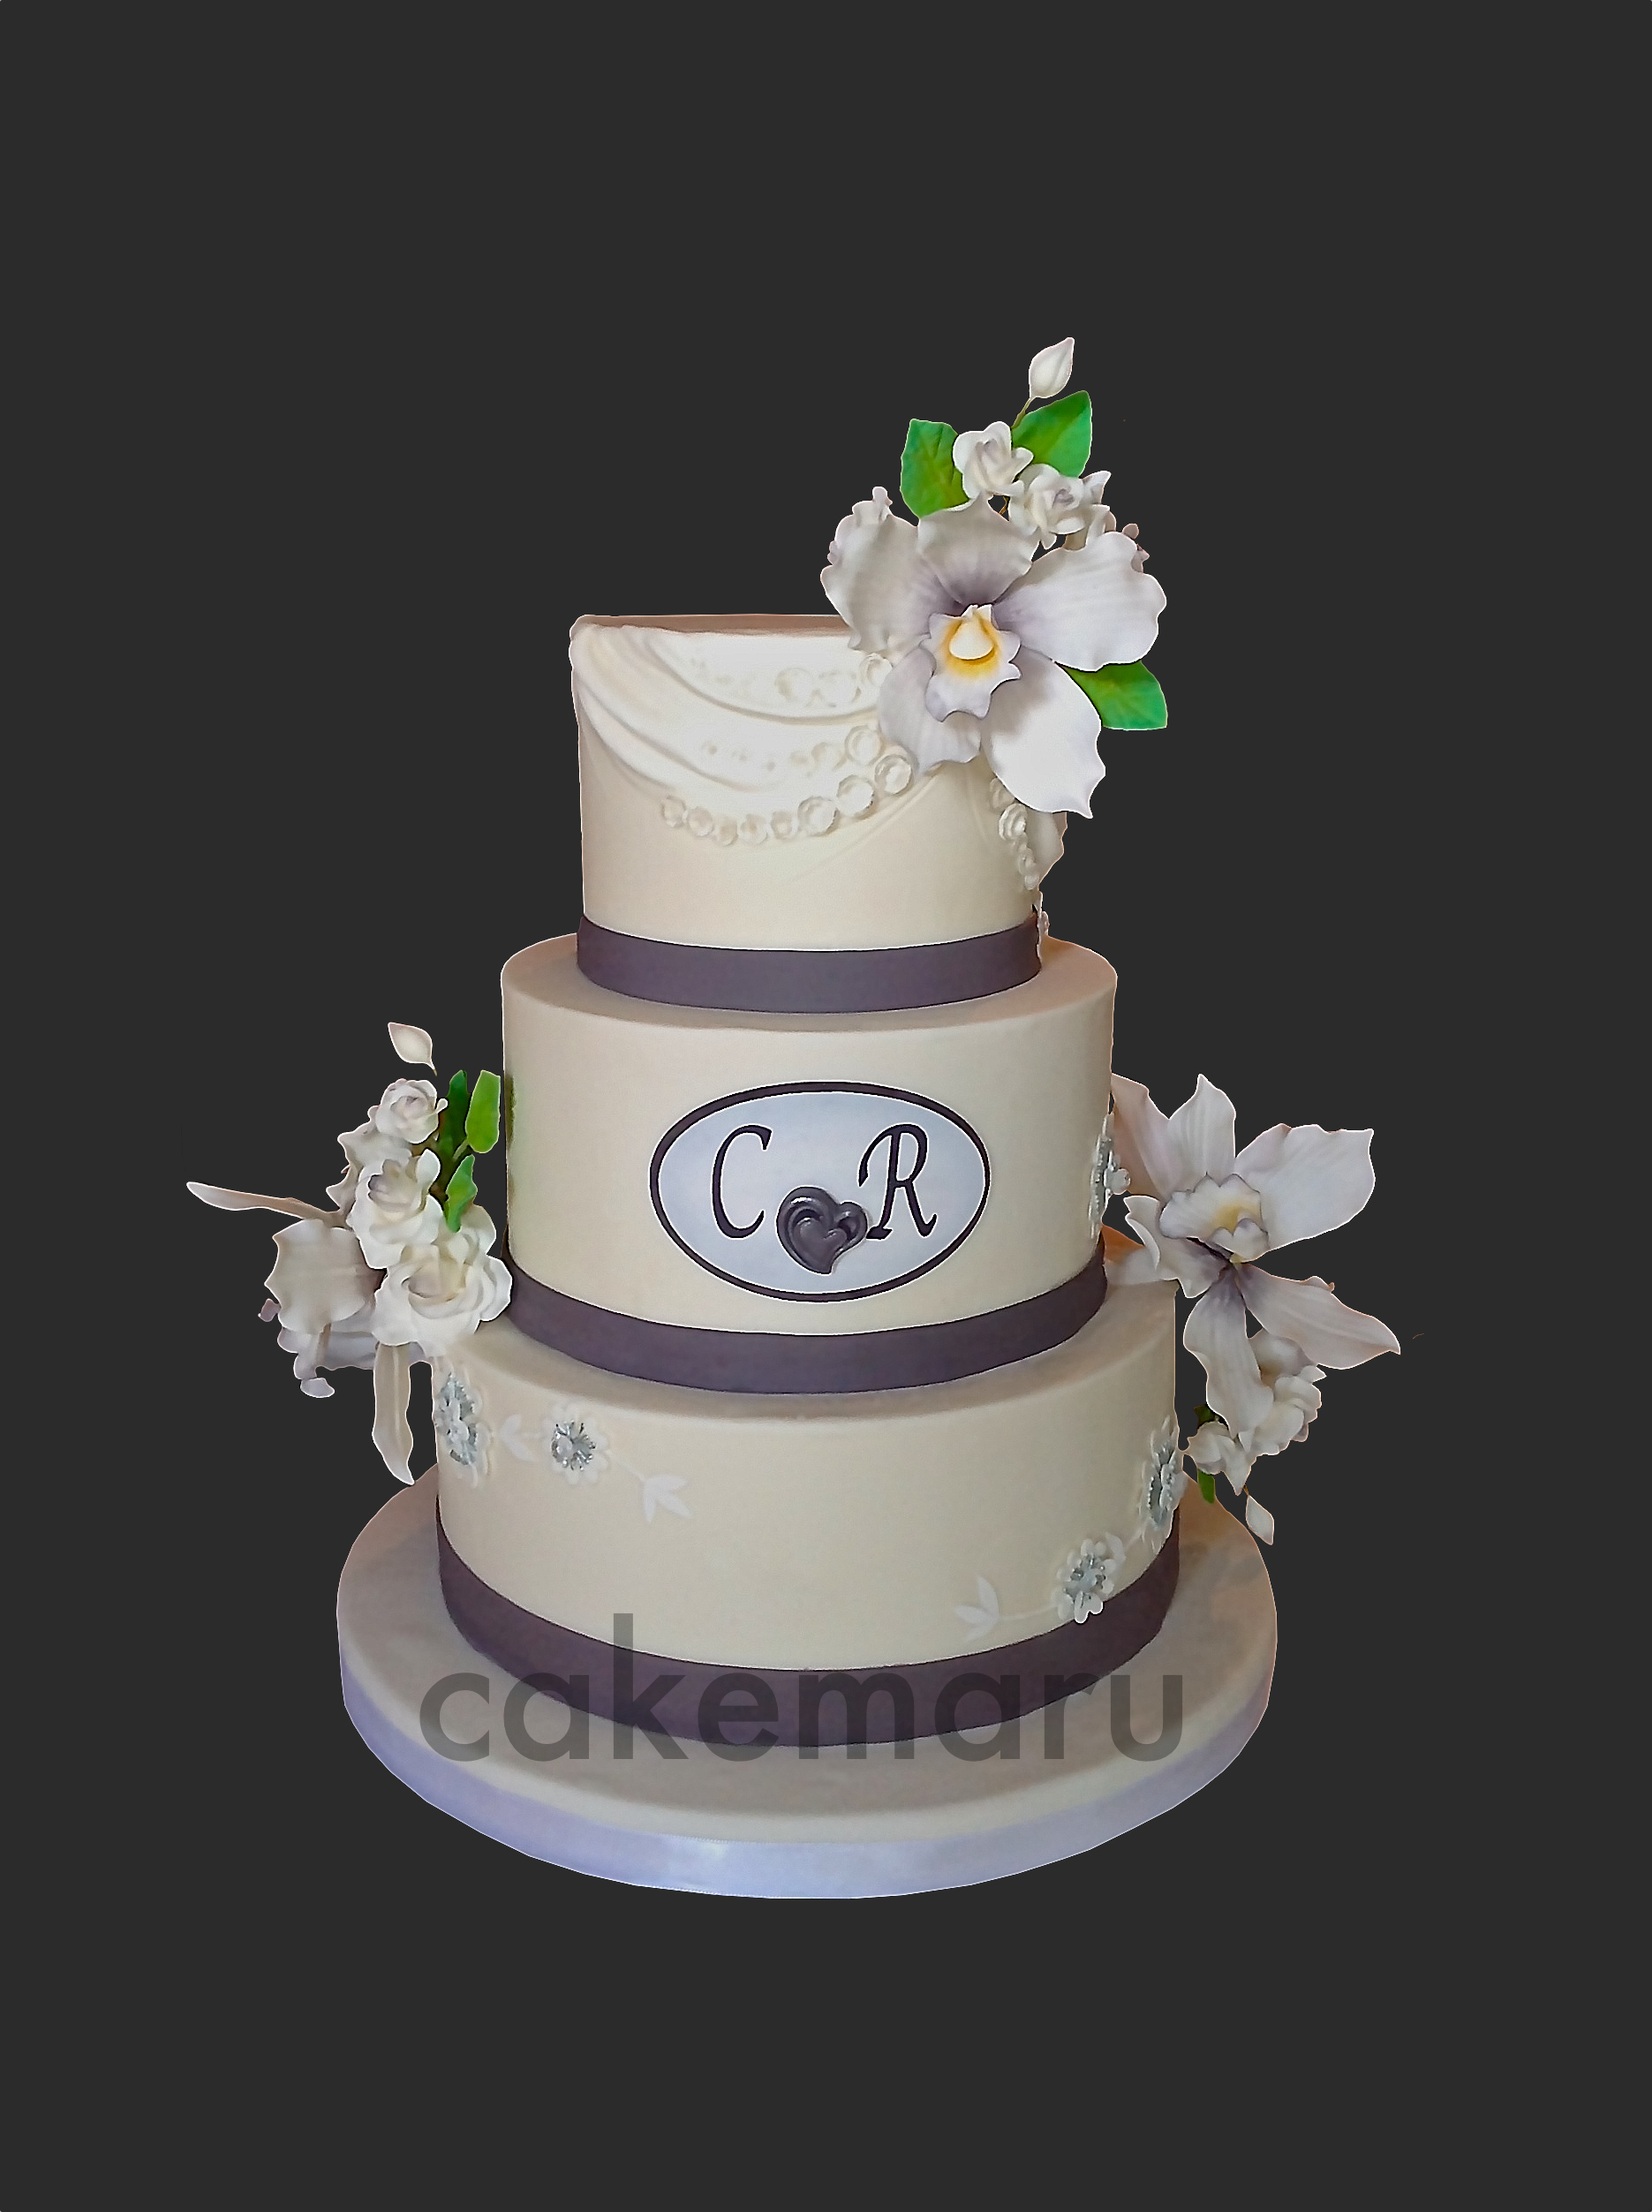 C&R Wedding Cake 1 with name.jpg